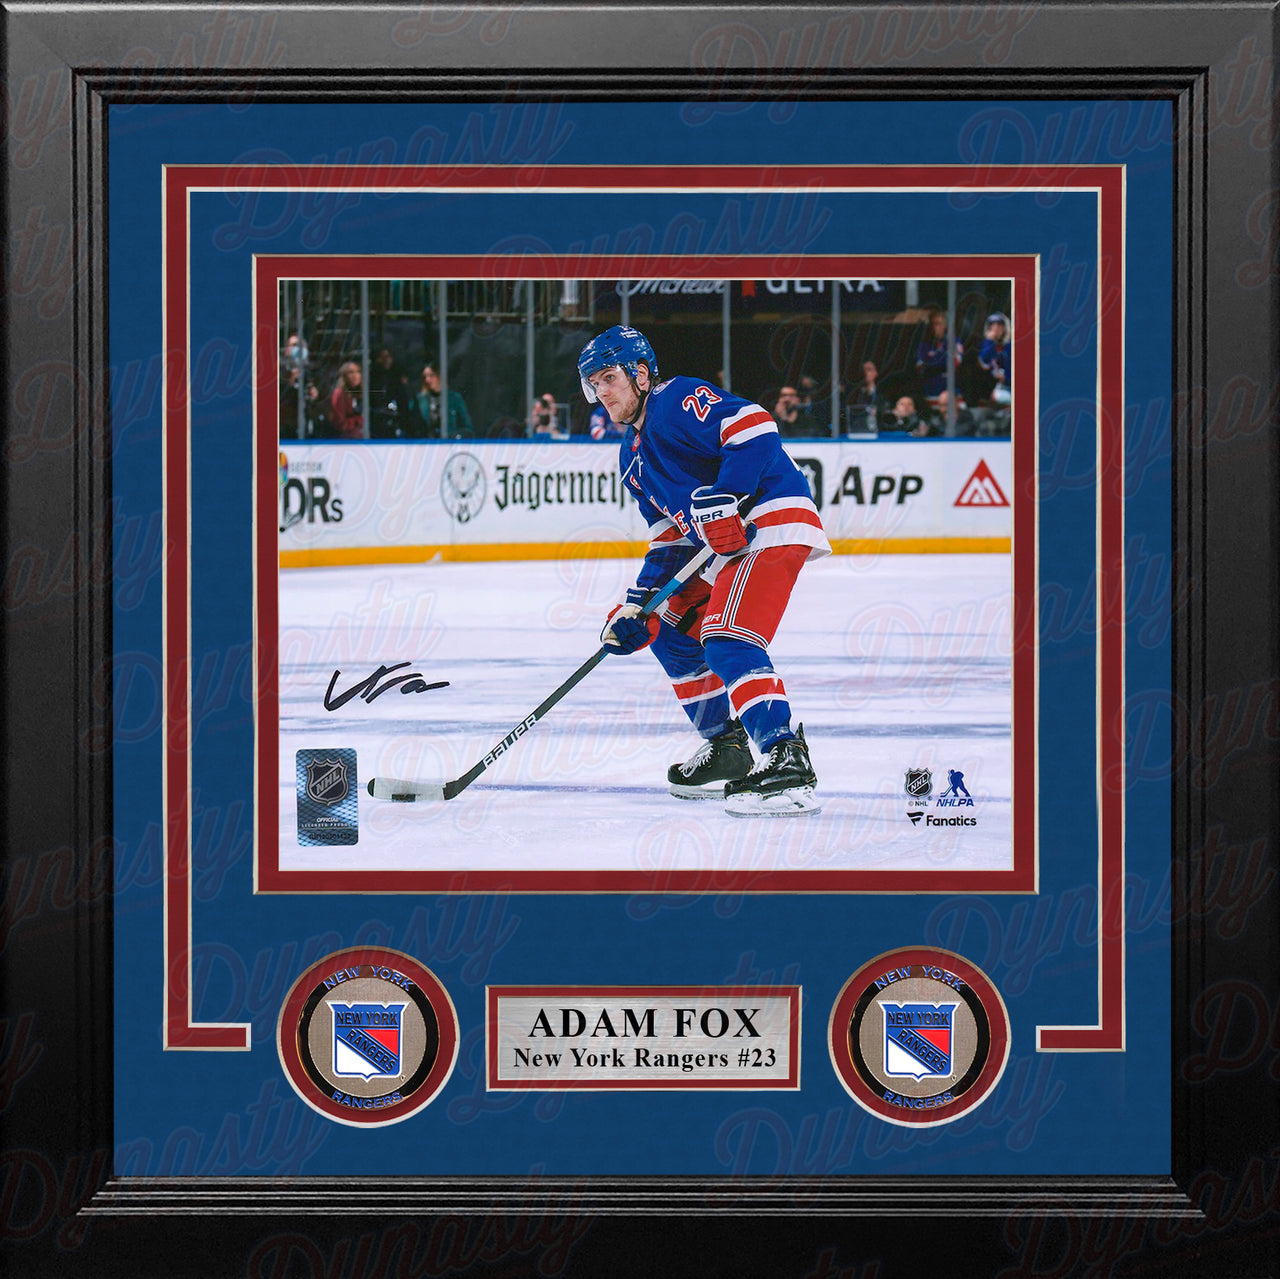 Adam Fox in Action New York Rangers Autographed 8" x 10" Framed Hockey Photo - Dynasty Sports & Framing 